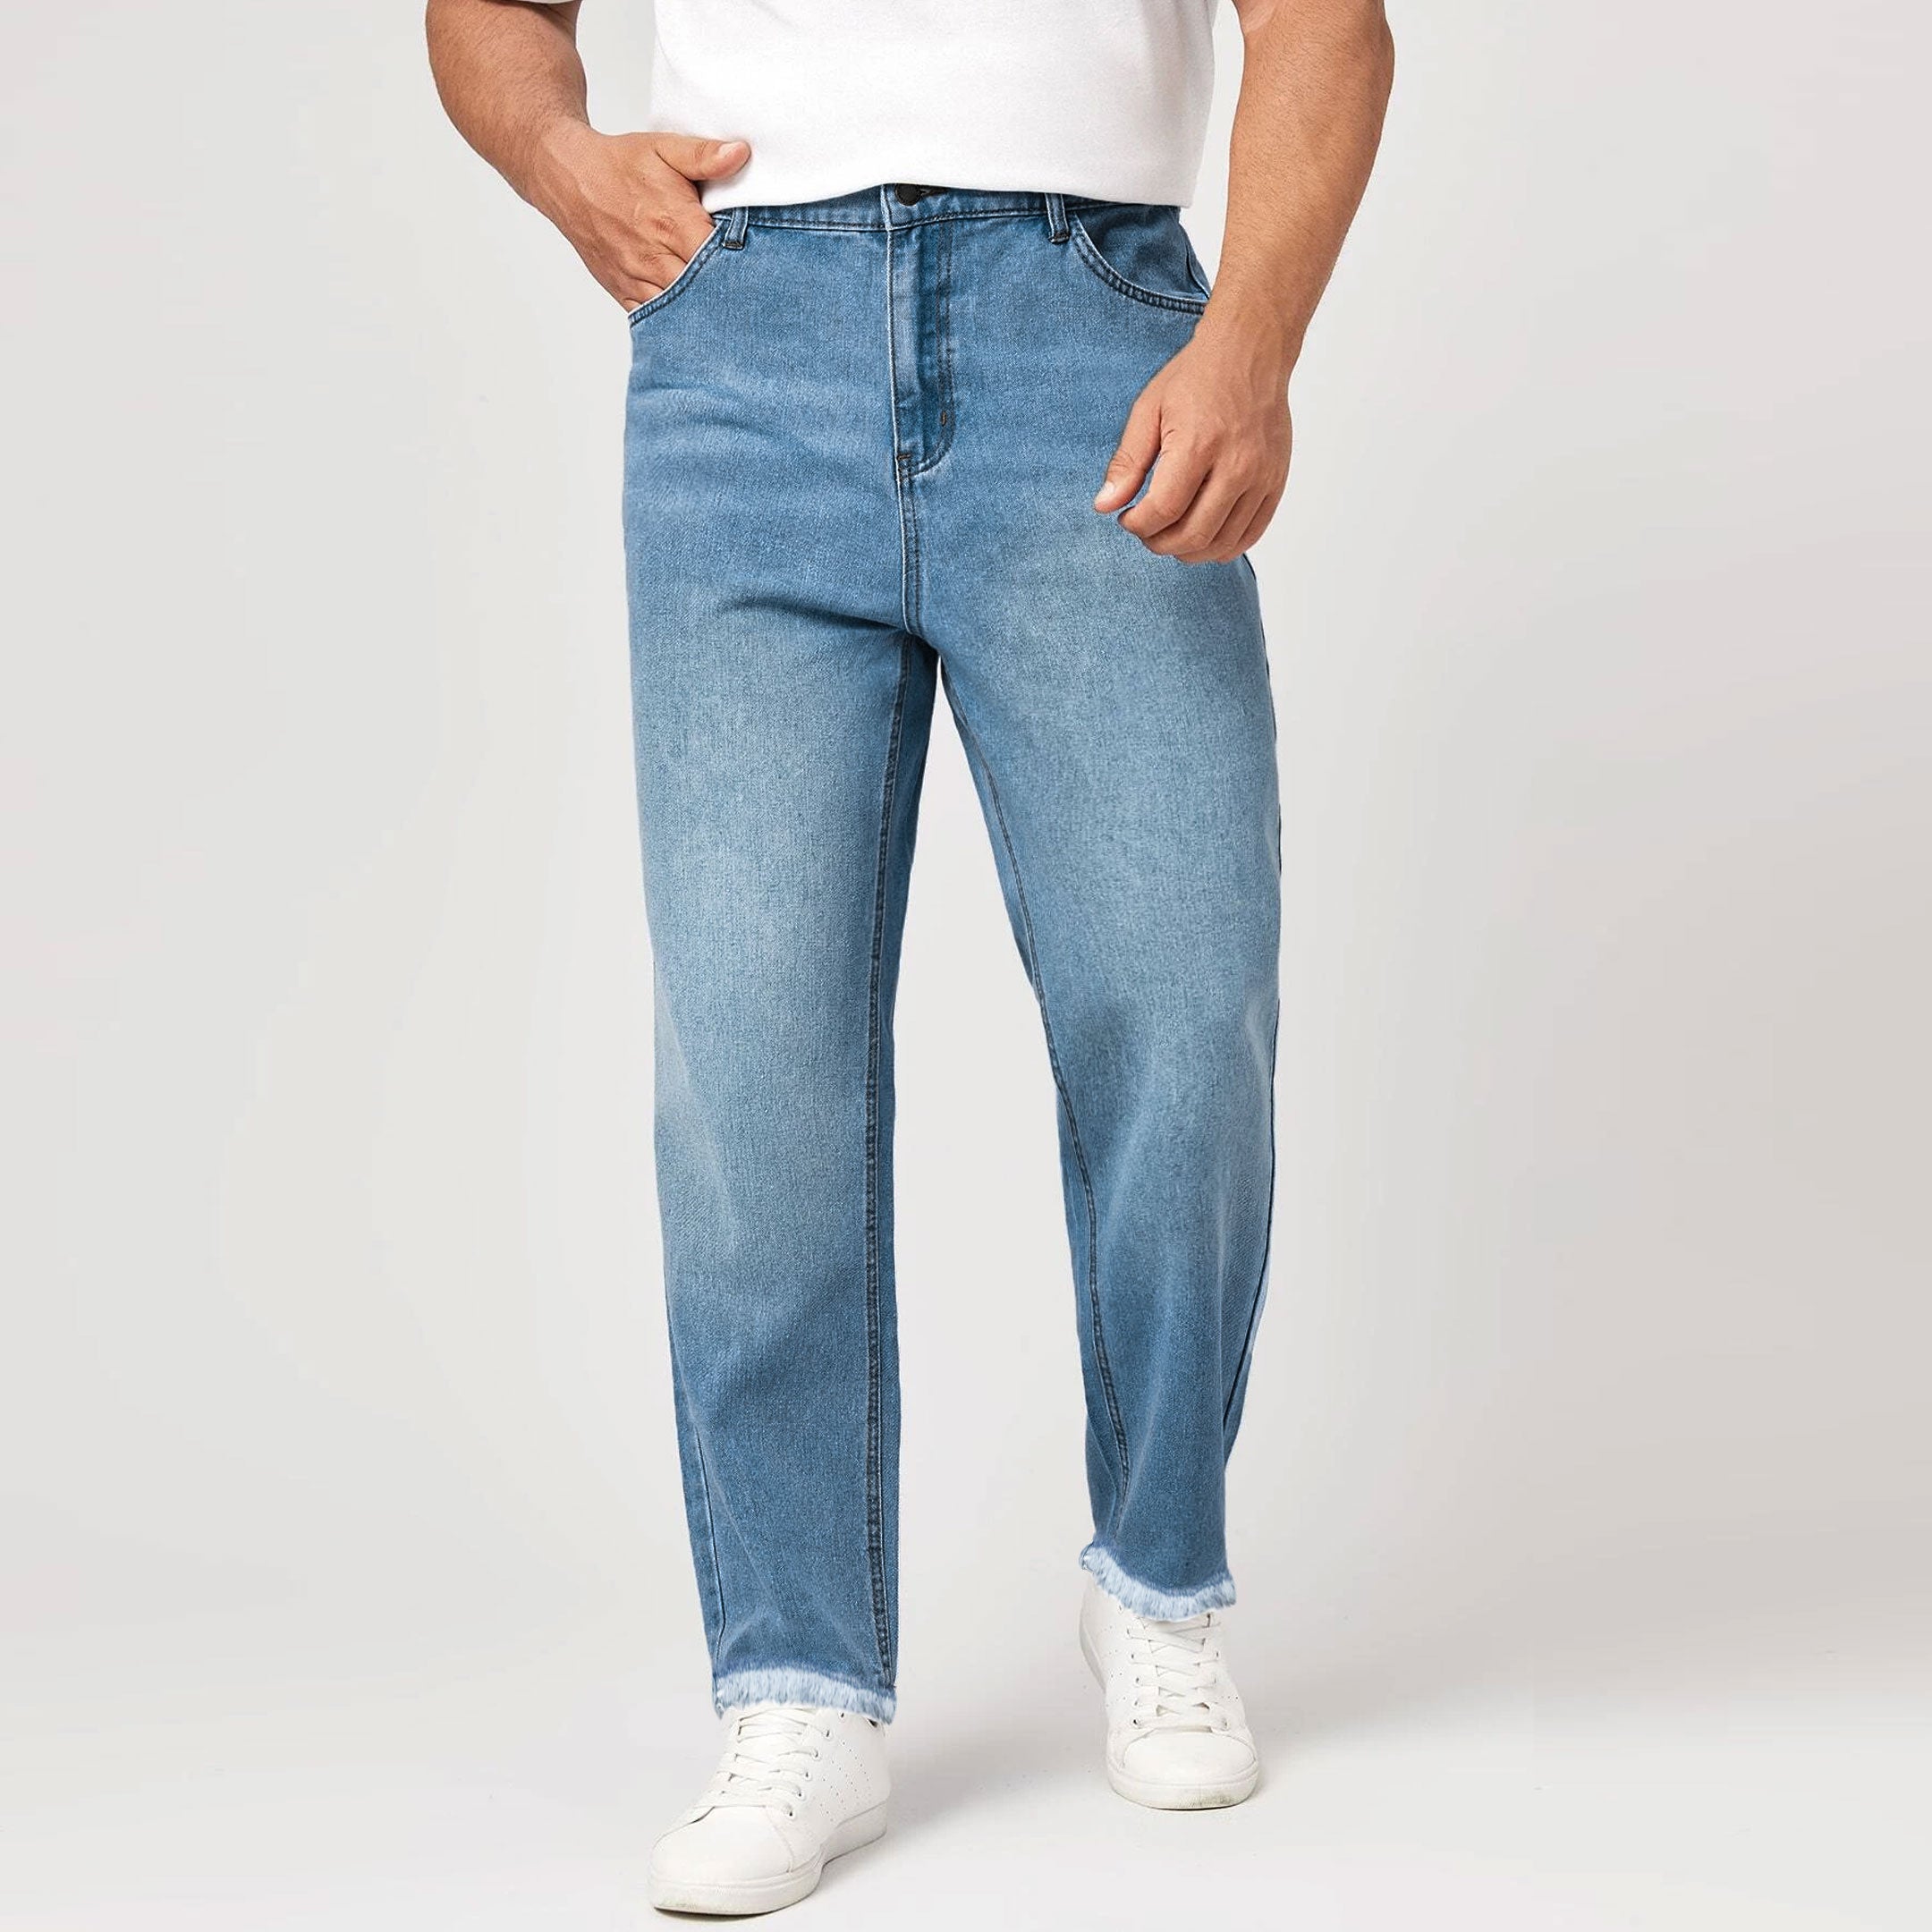 Men's Denim jeans